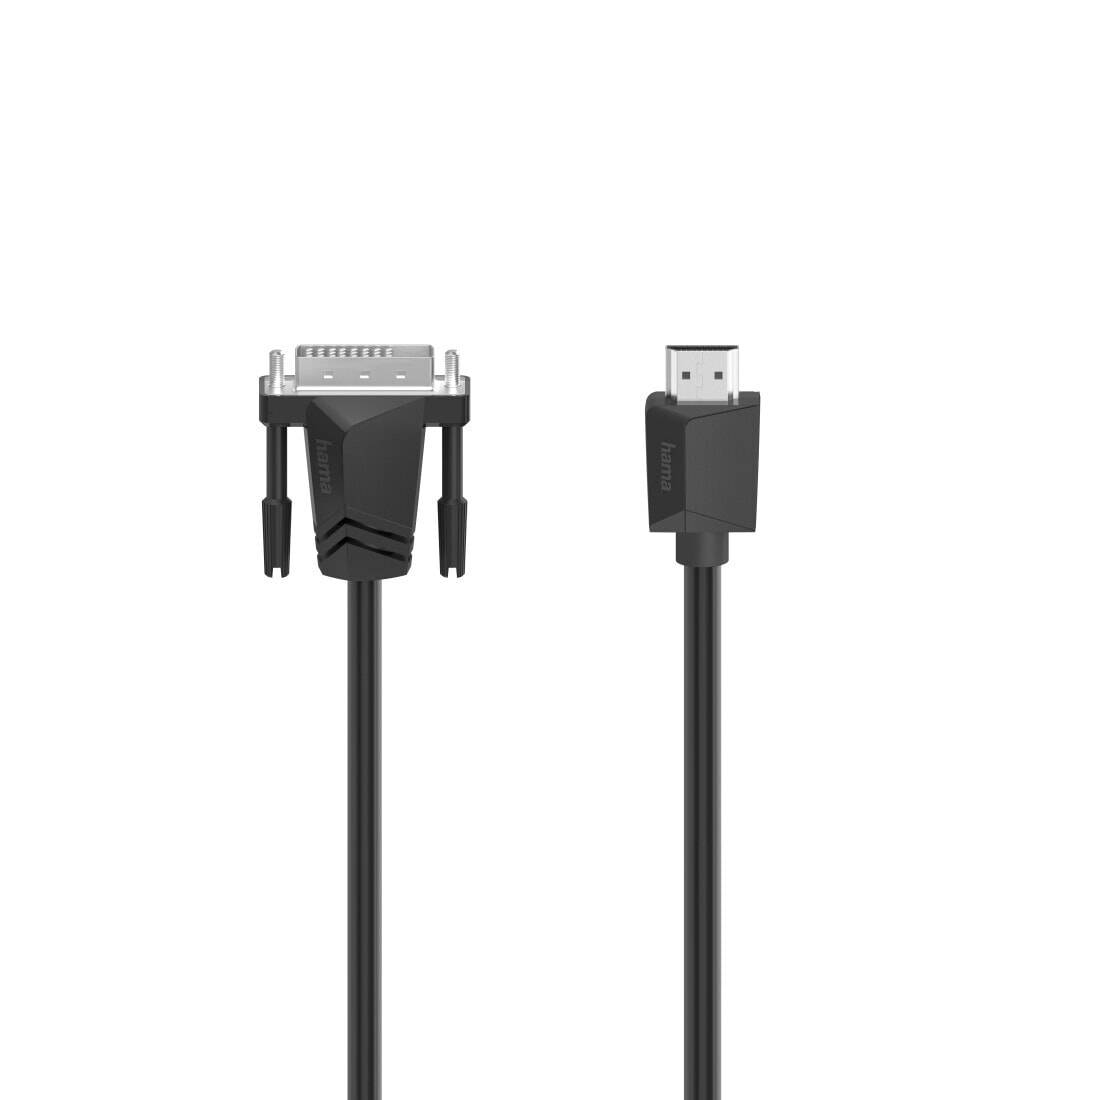 Hama 00200716 DVI кабель 3 m DVI-D HDMI Тип A (Стандарт) Черный